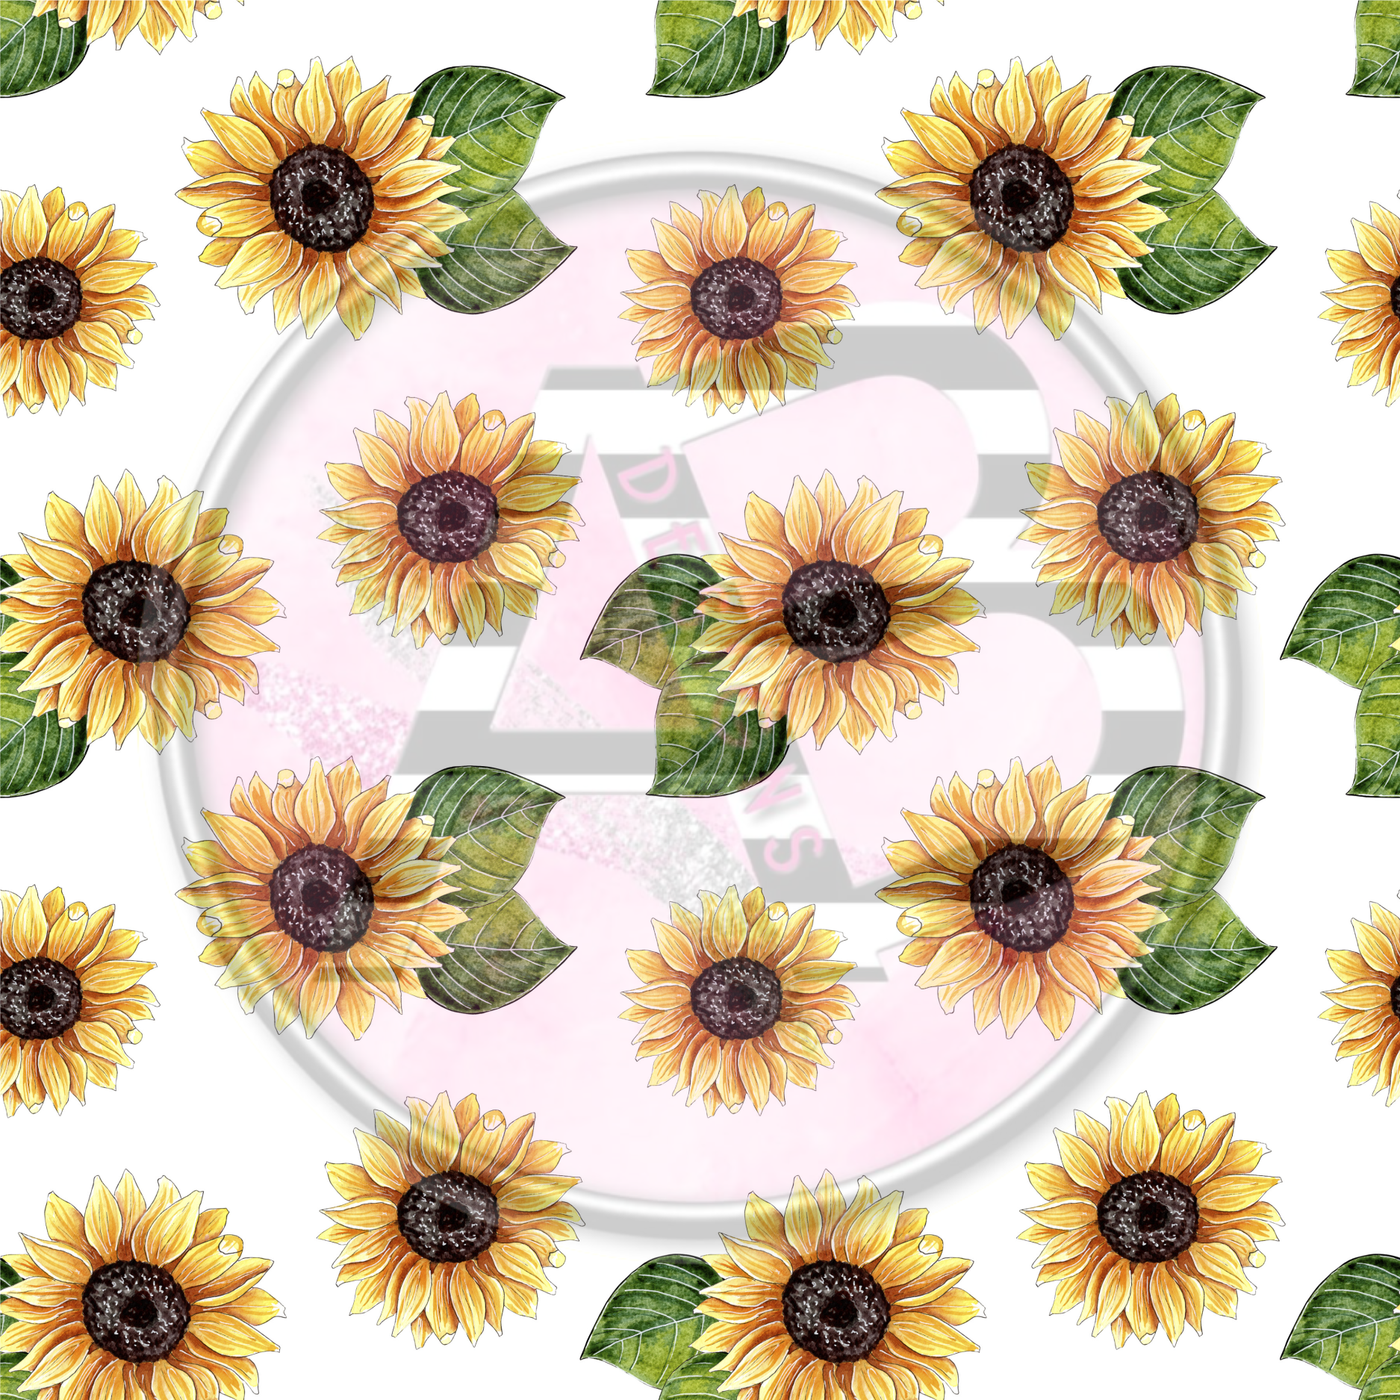 Adhesive Patterned Vinyl - Sunflower 16